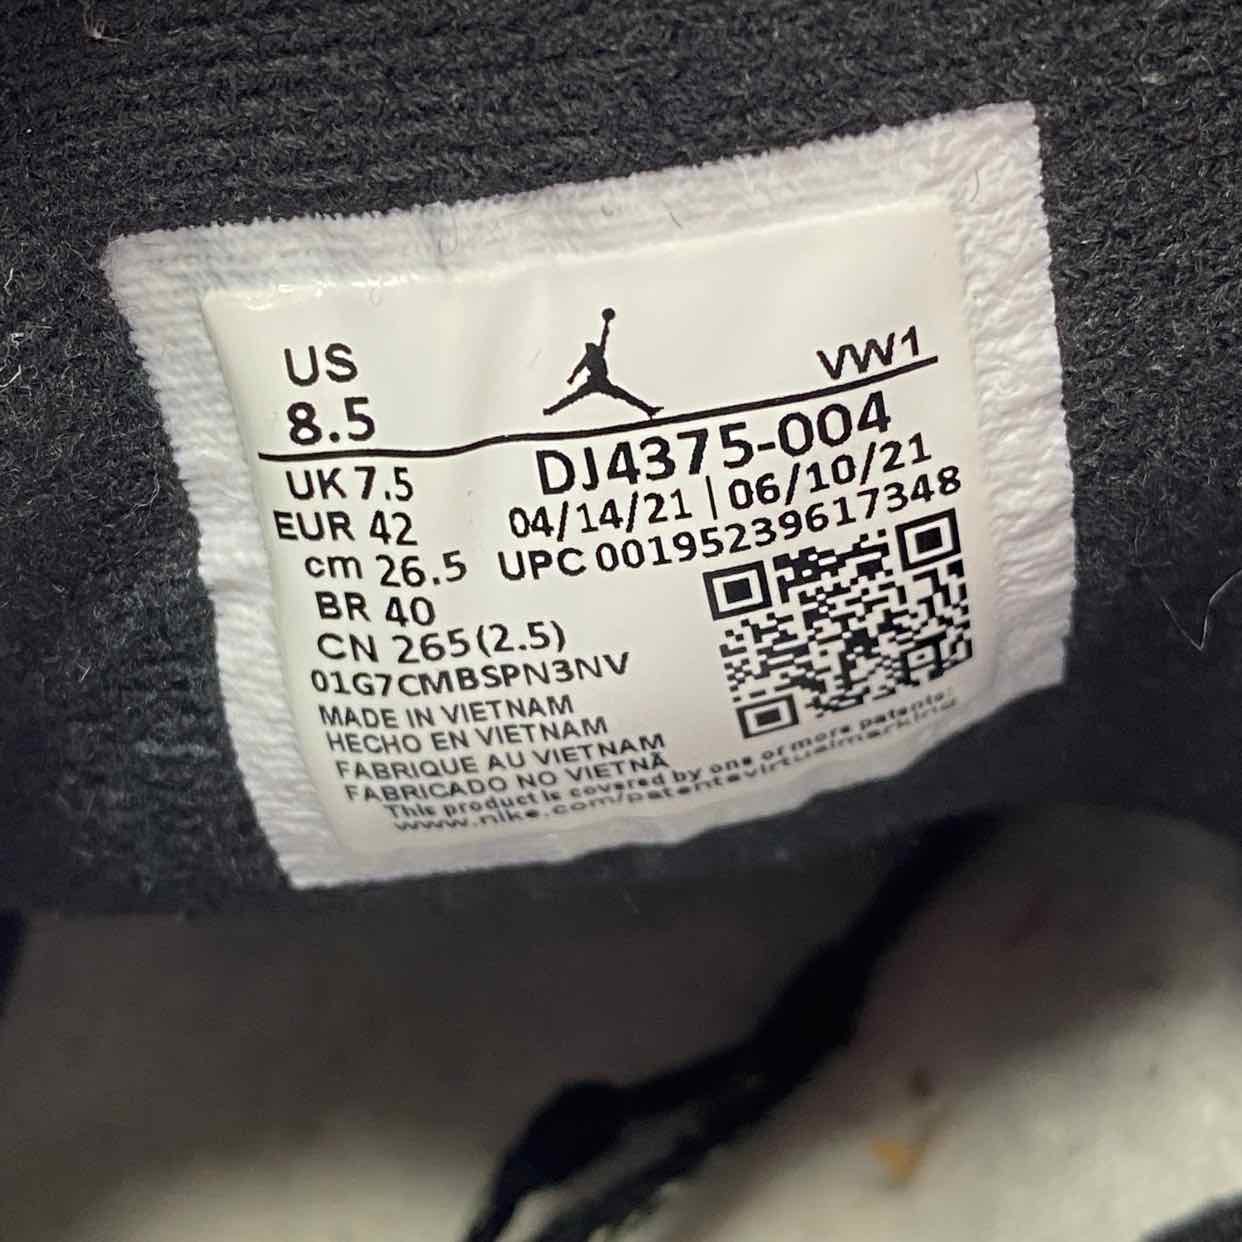 Air Jordan 2 Retro Low &quot;Ow Black&quot; 2021 Used Size 8.5